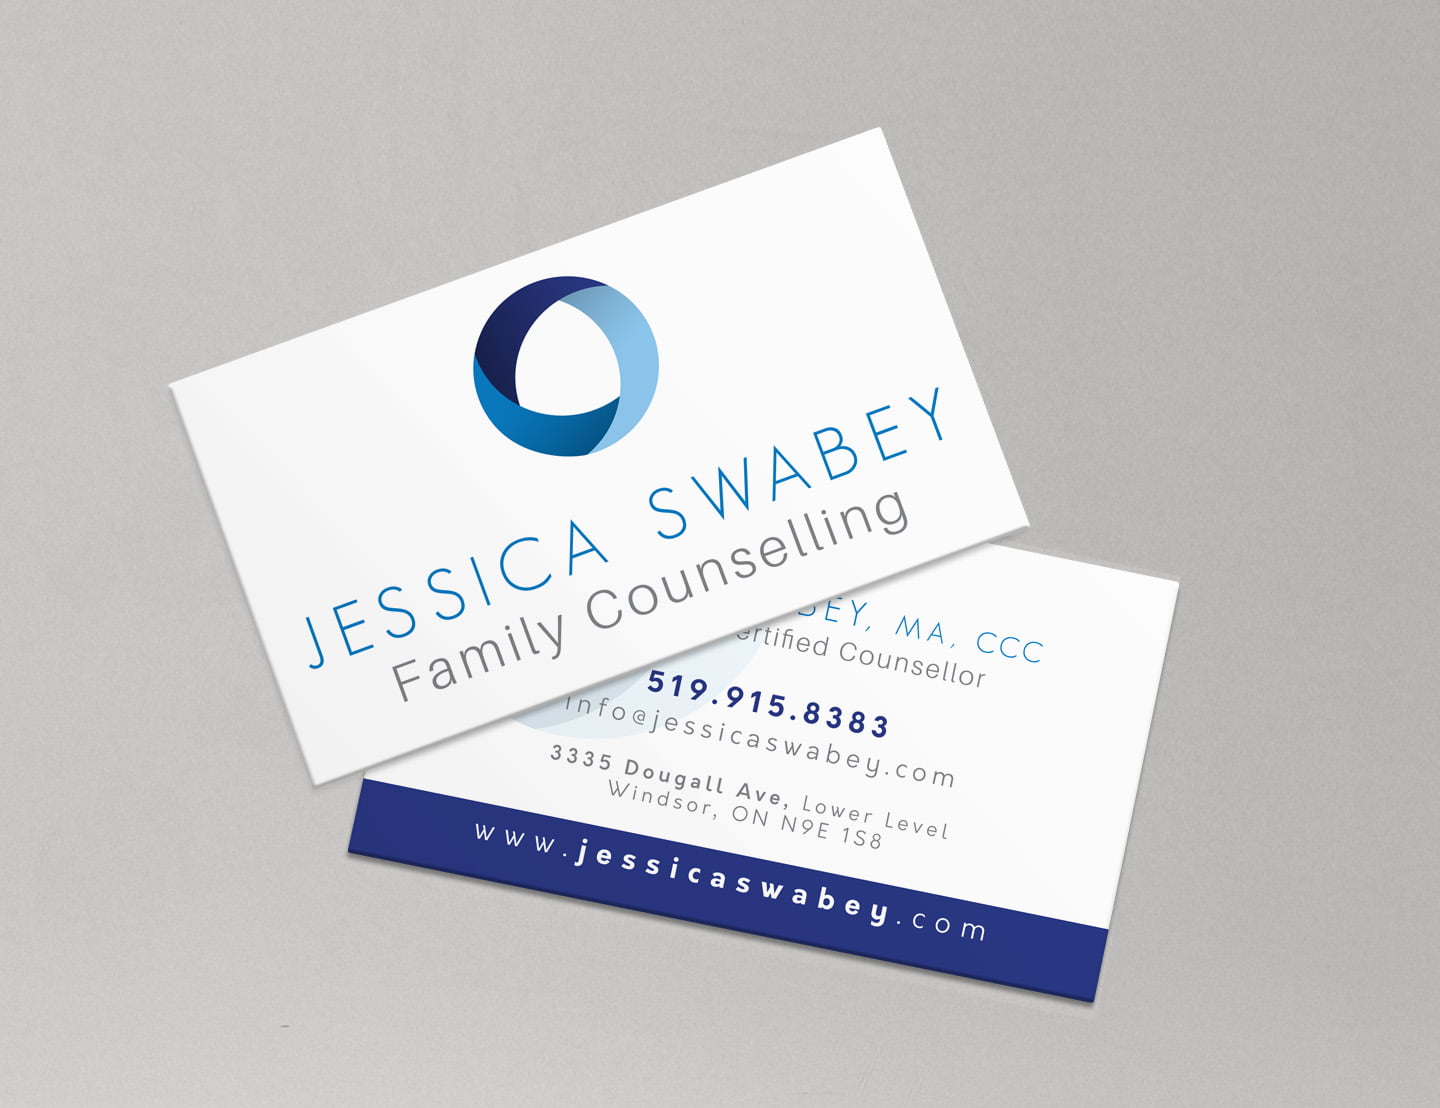 mainstream marketing portfolio jessica swabey business cards